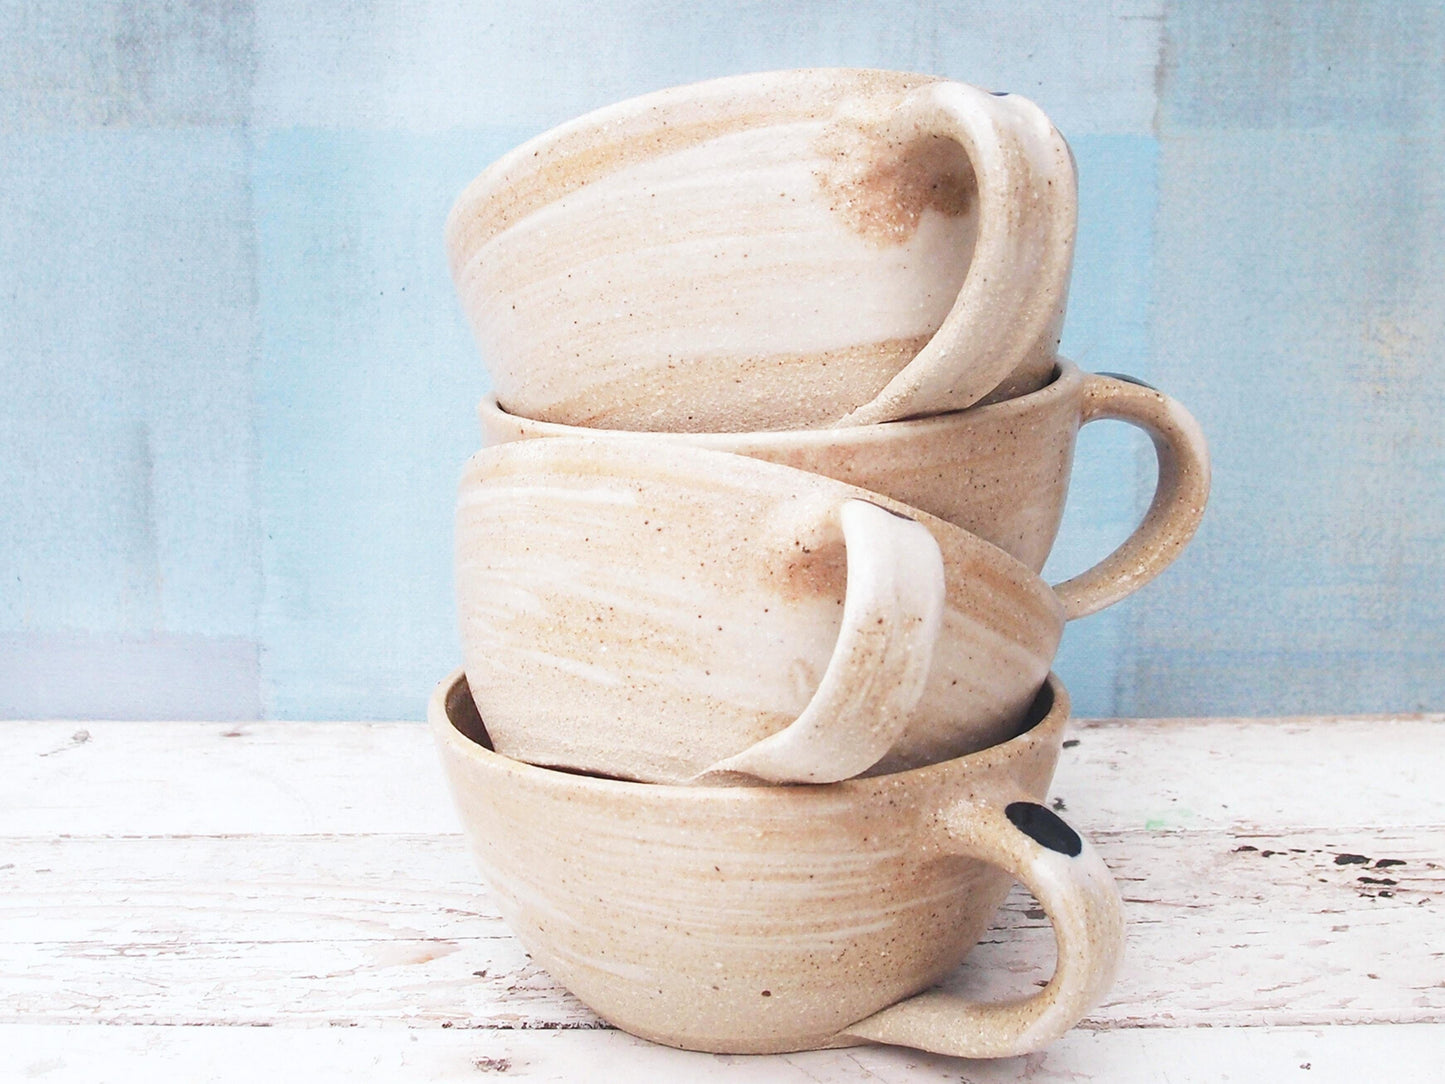 SabineSchmidtPottery Large Cappuccino Cup in White/Blue, Rustic Studio Pottery Devon Ceramics